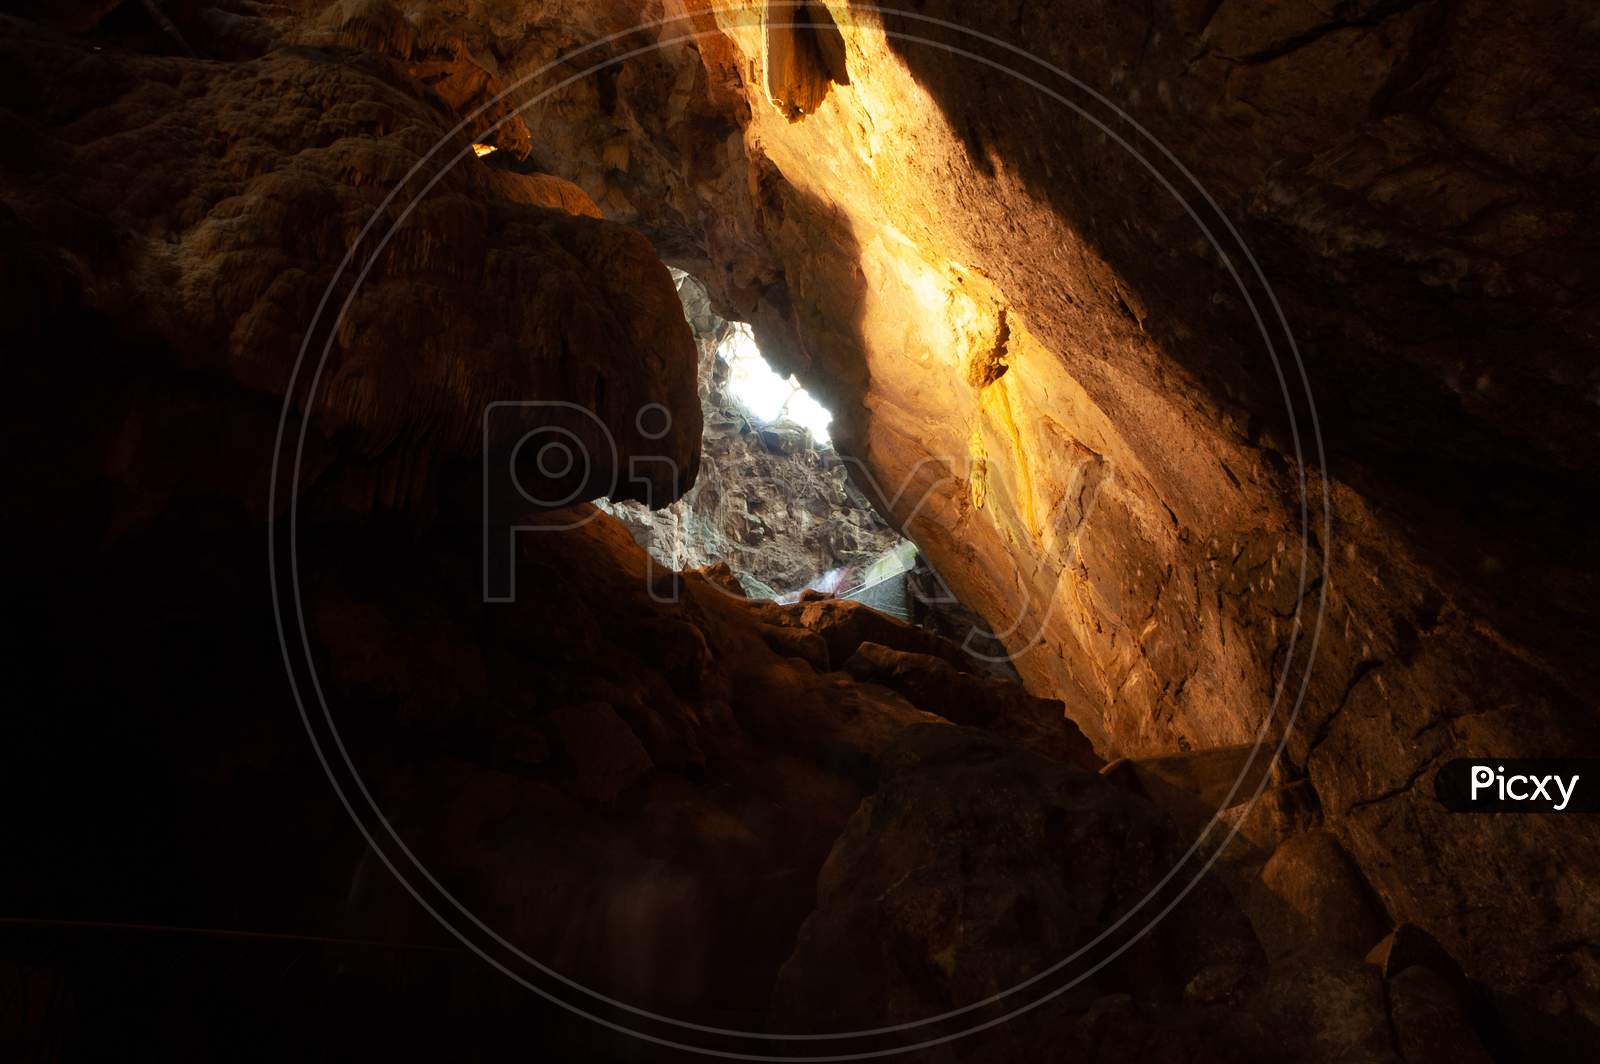 A hole inside the cave